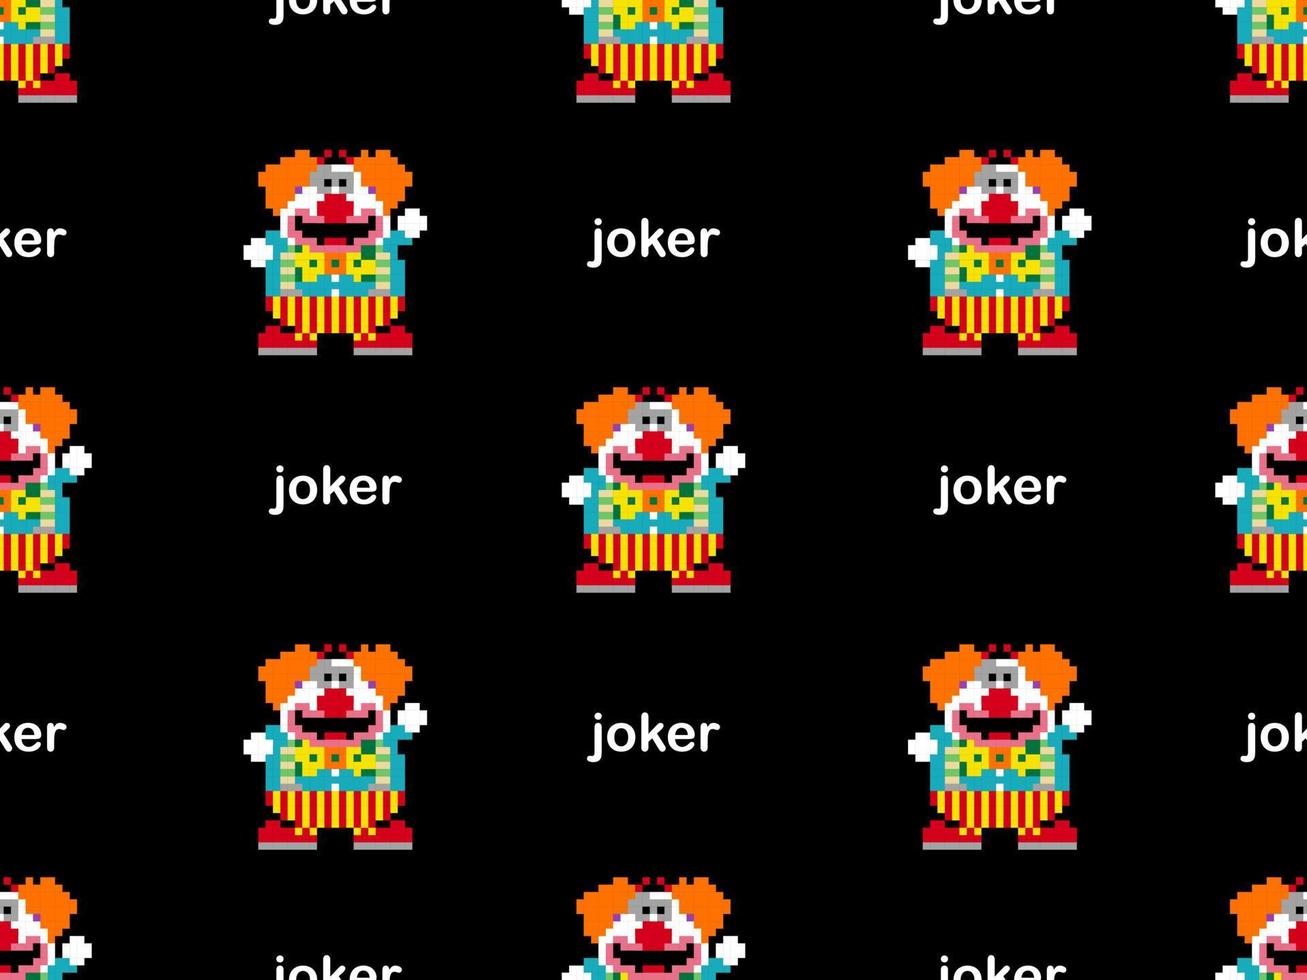 Joker cartoon character seamless pattern on black background.Pixel style vector